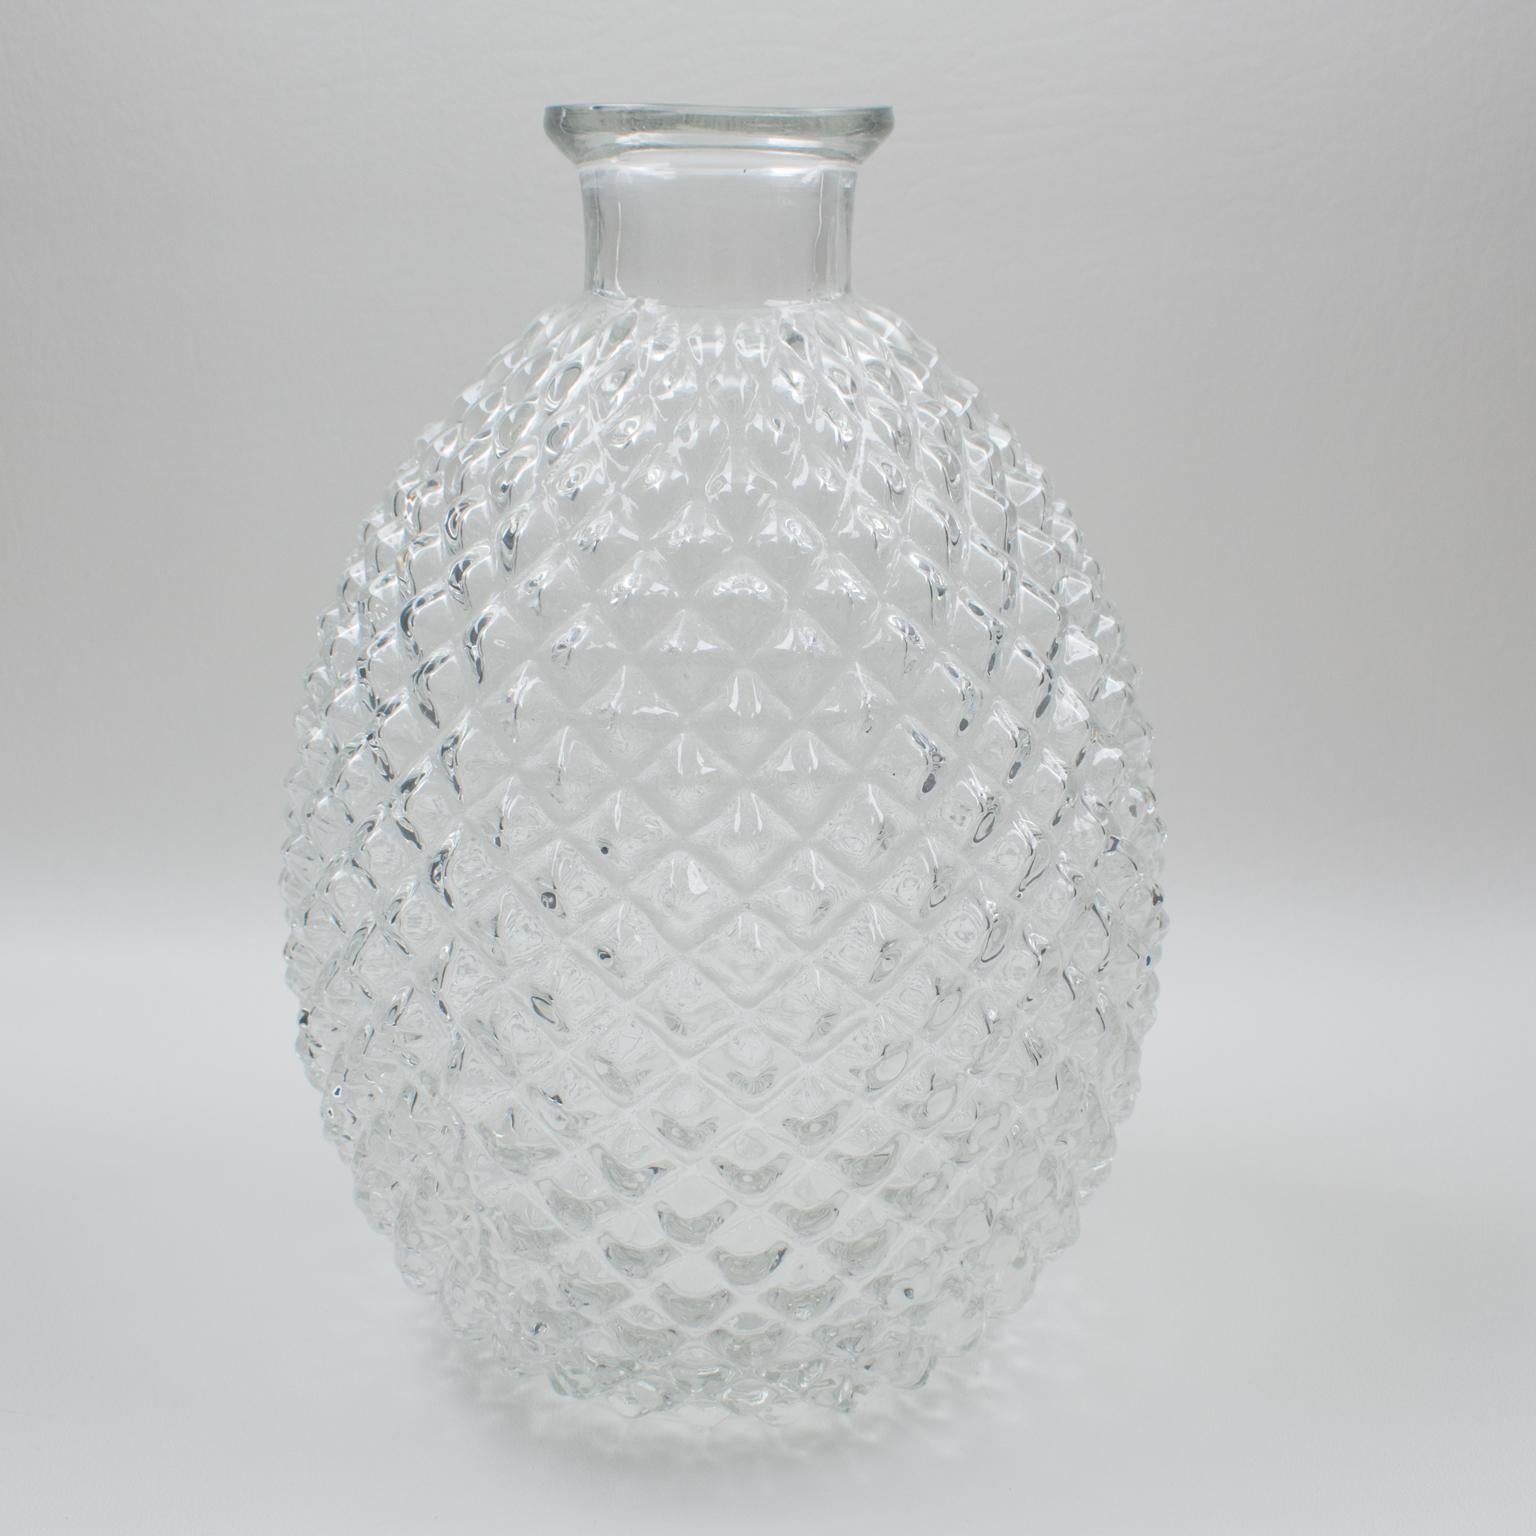 Metal 1980s Molded Glass Pineapple Barware Bottle or Decanter